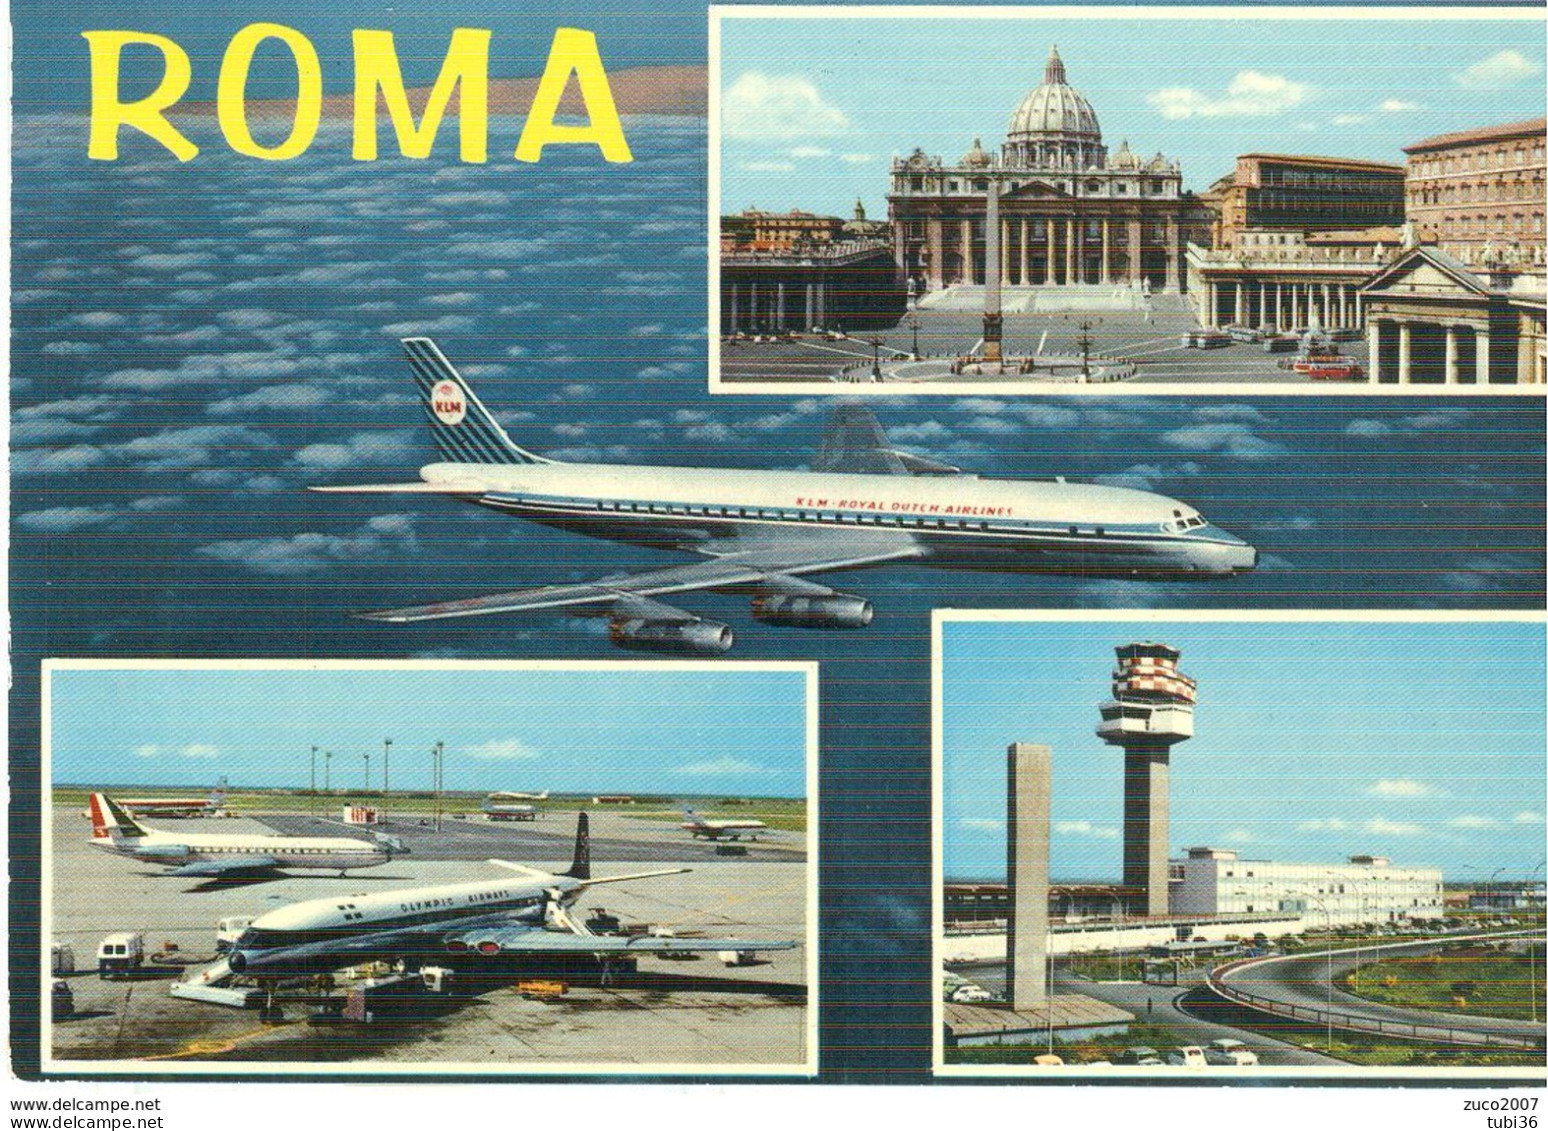 ROMA - 4 VEDUTINE - AEROPORTO,AEREI -S.PIETRO-COLORI,VIAGGIATA 1969 - POSTE ROMA - Transport